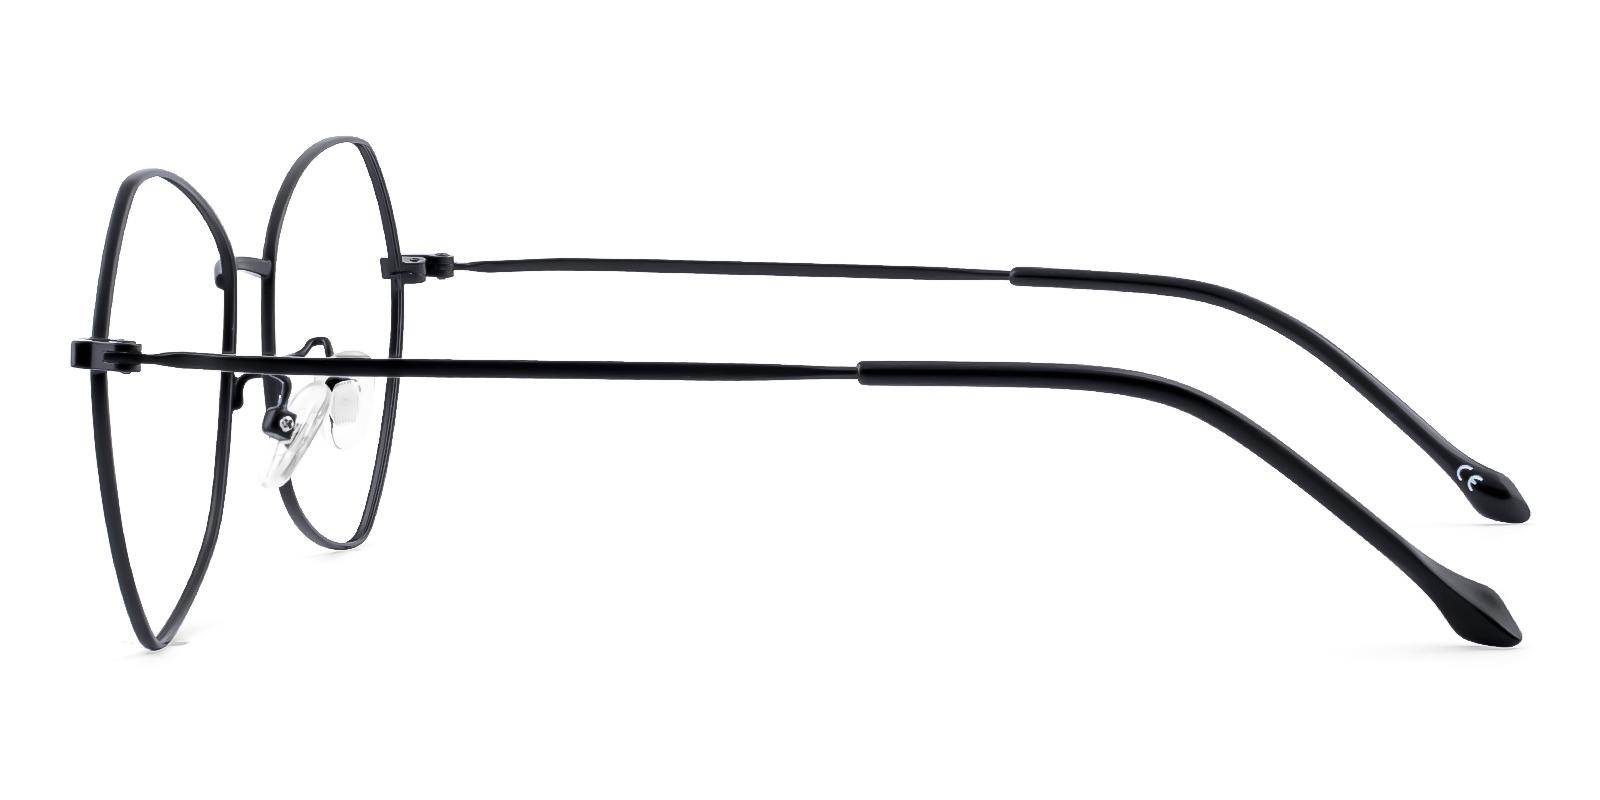 Thellet Black Metal Eyeglasses , NosePads Frames from ABBE Glasses